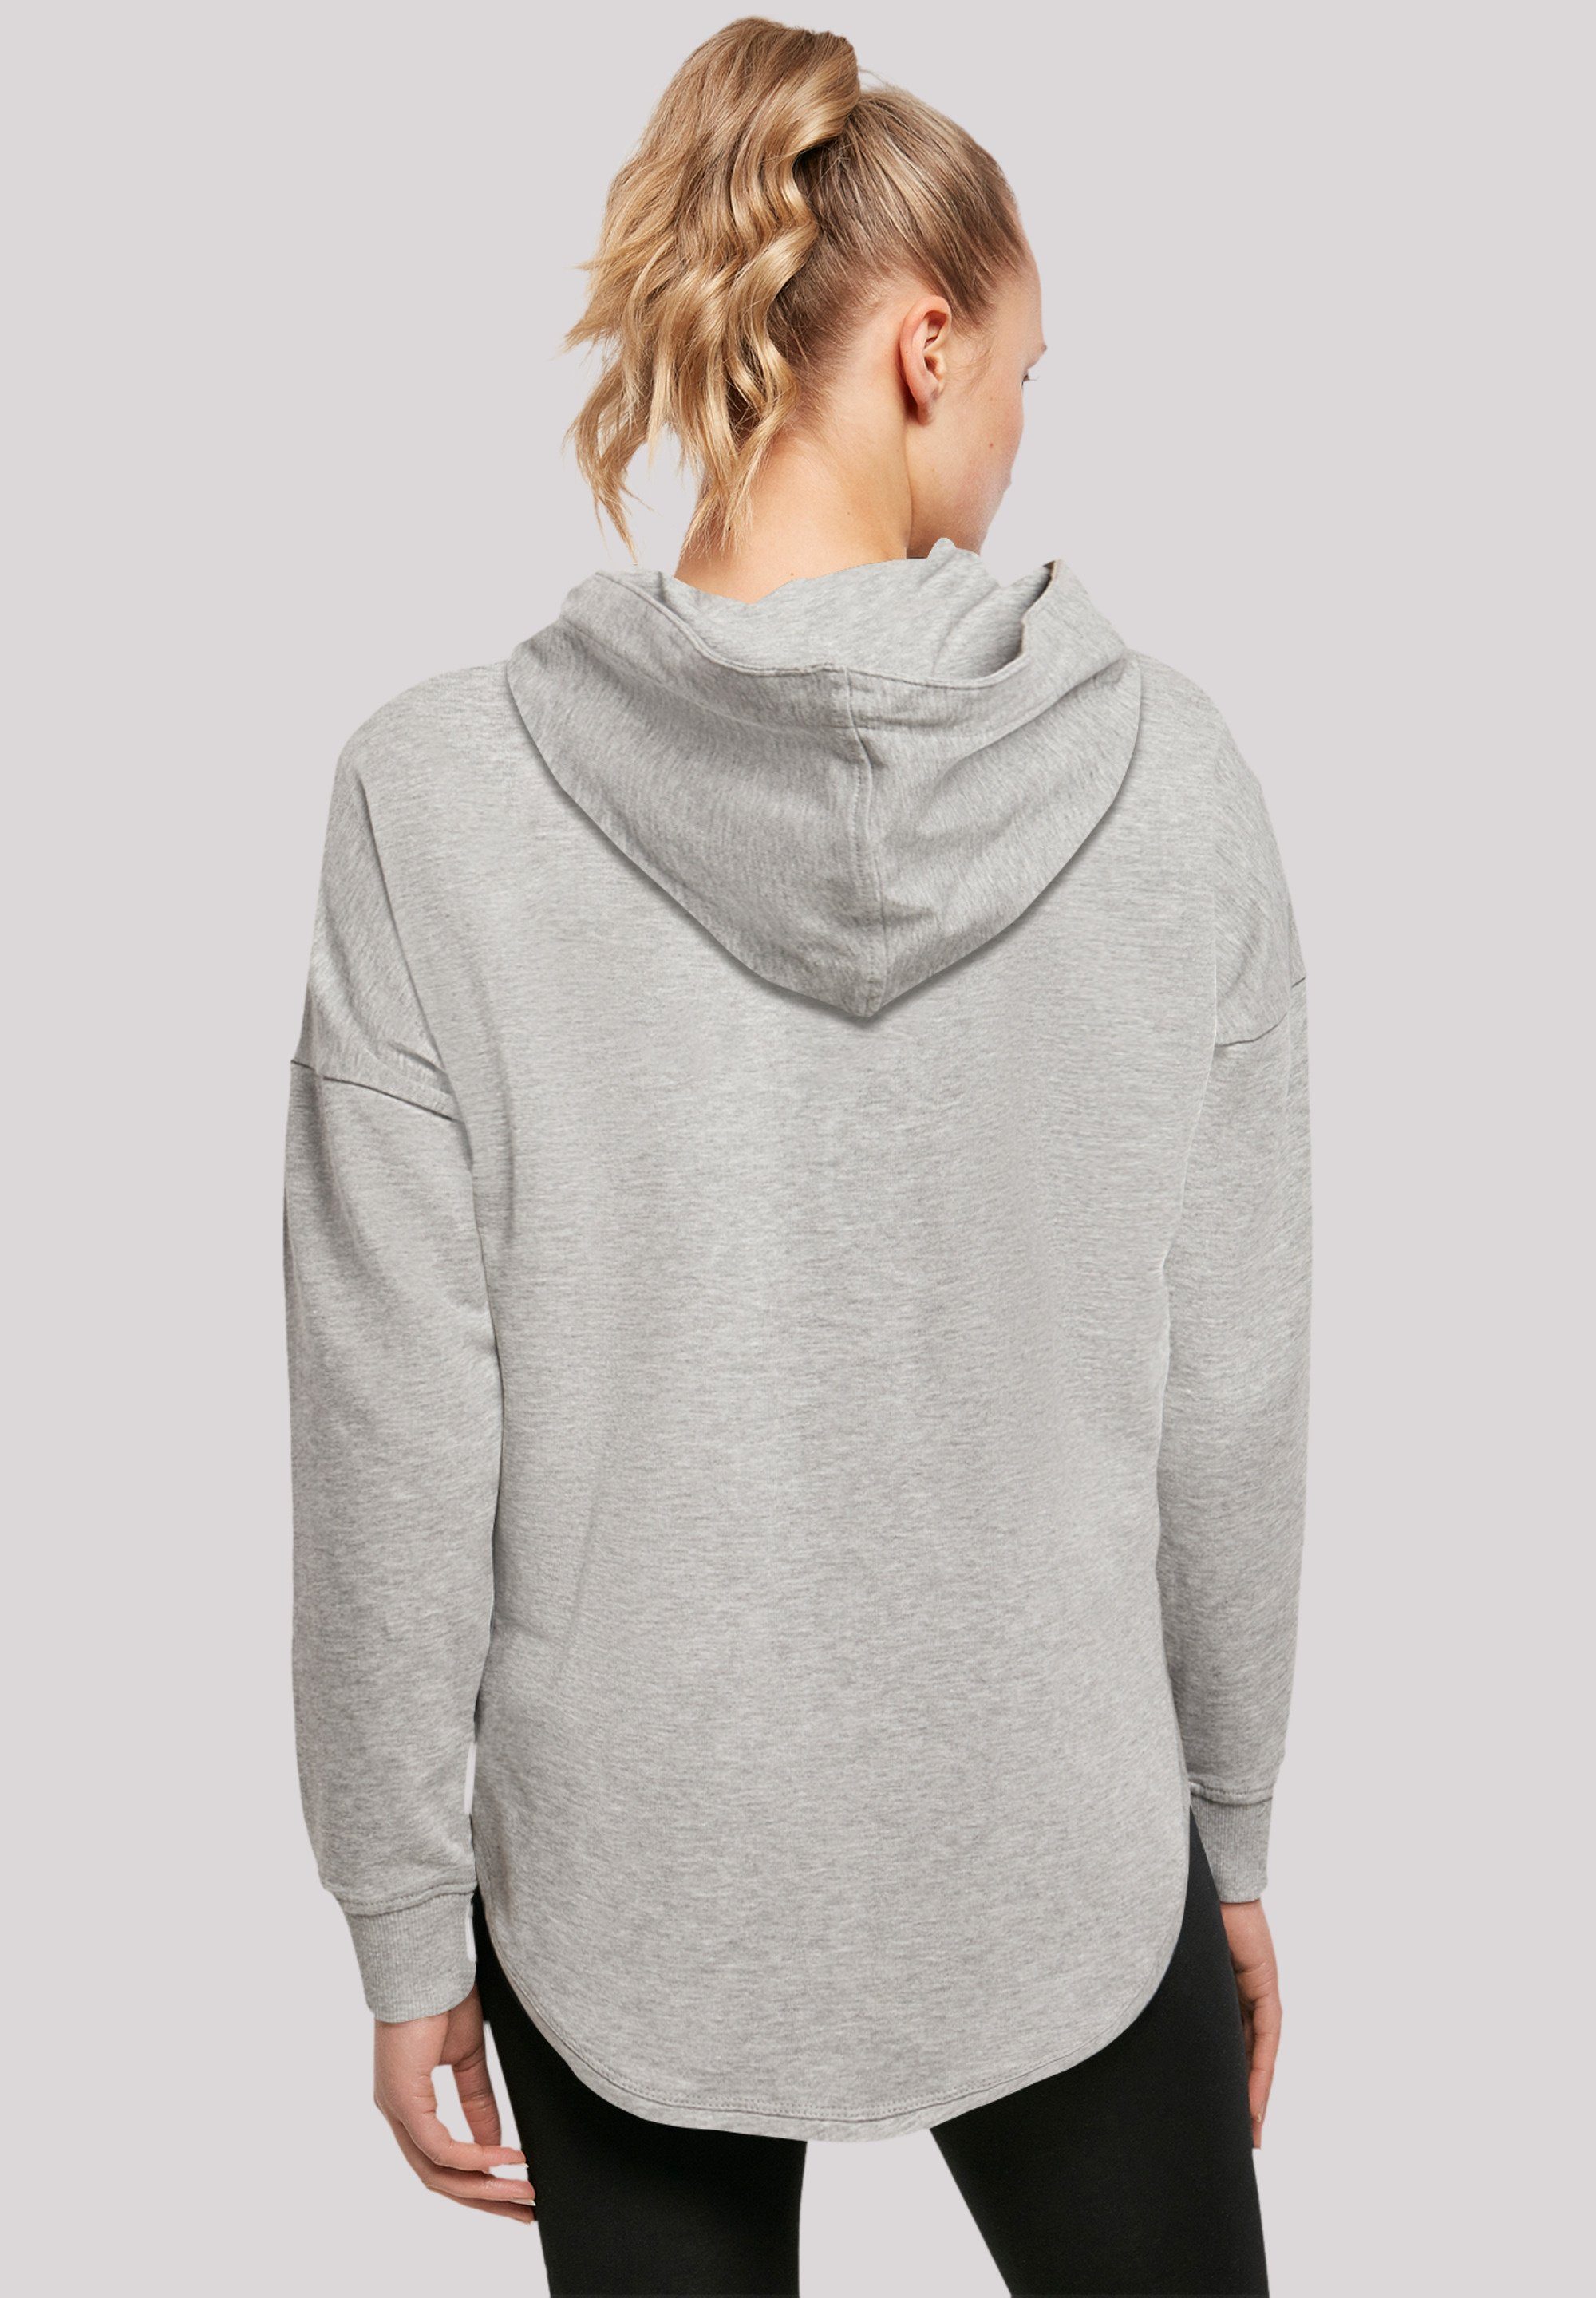 grey F4NT4STIC Namaste Yoga Print Sweatshirt Skelett Halloween